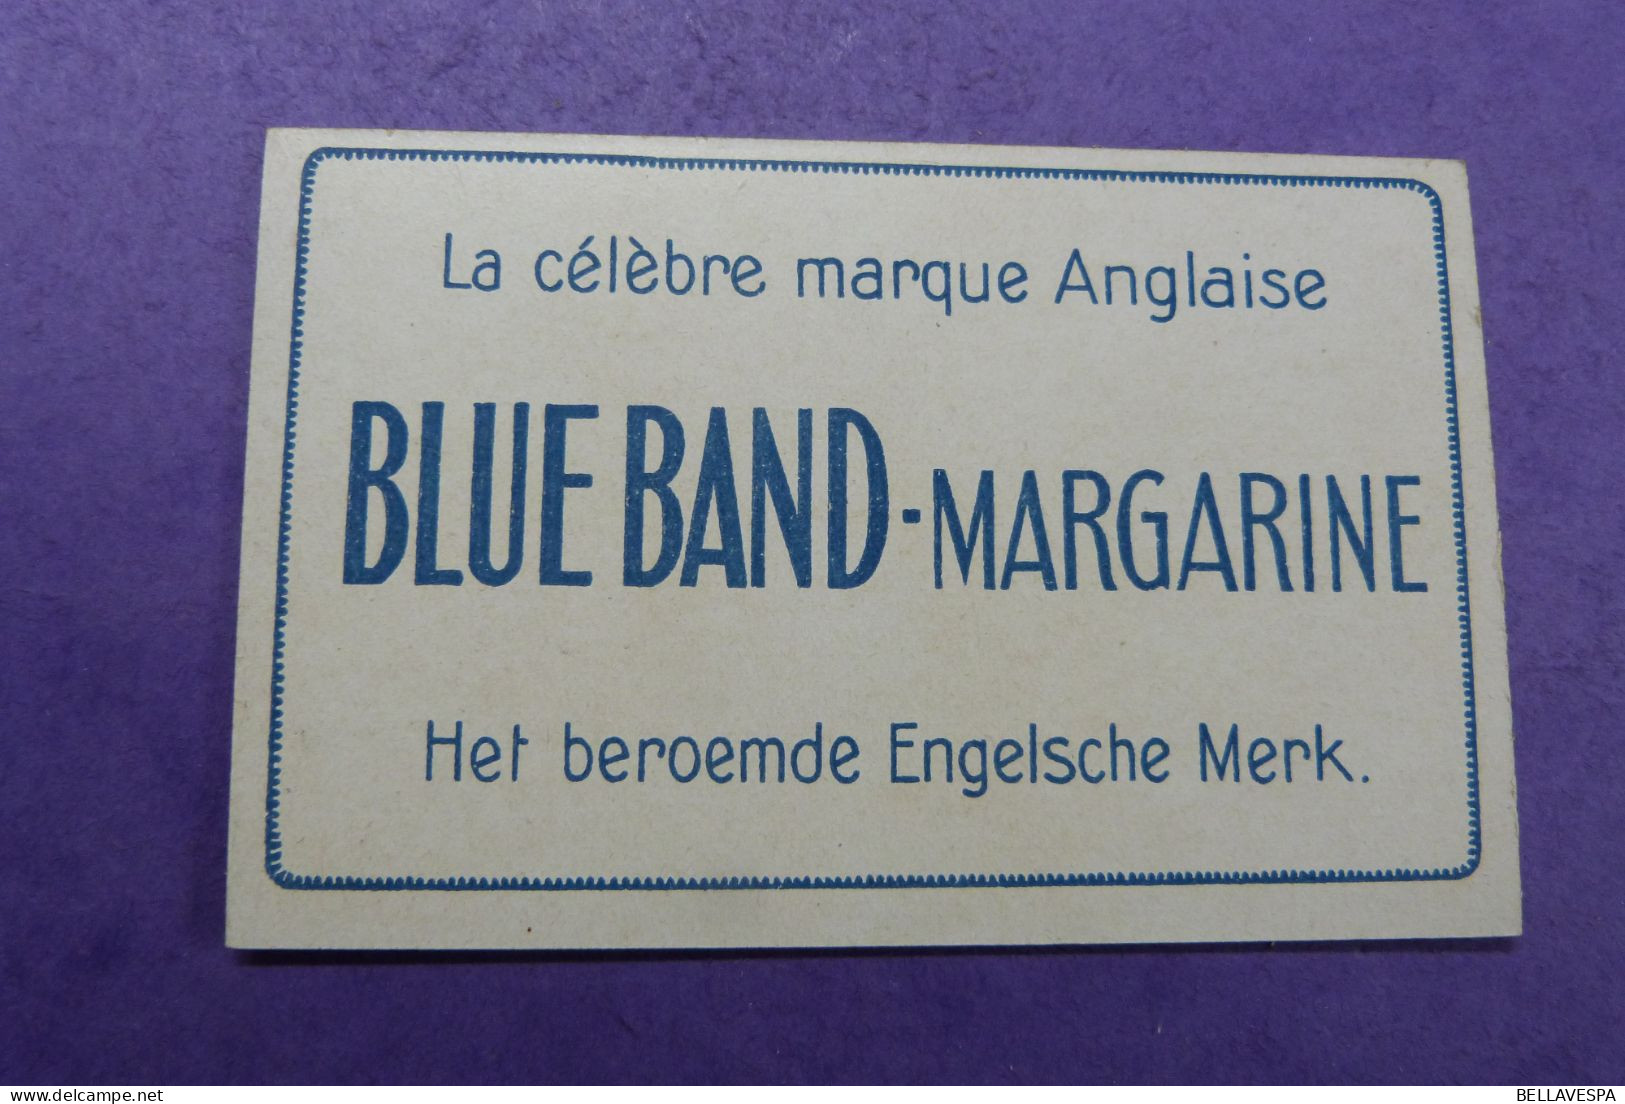 Bleu-Band Margarine Marque Anglaise  lot x 6 chromo's